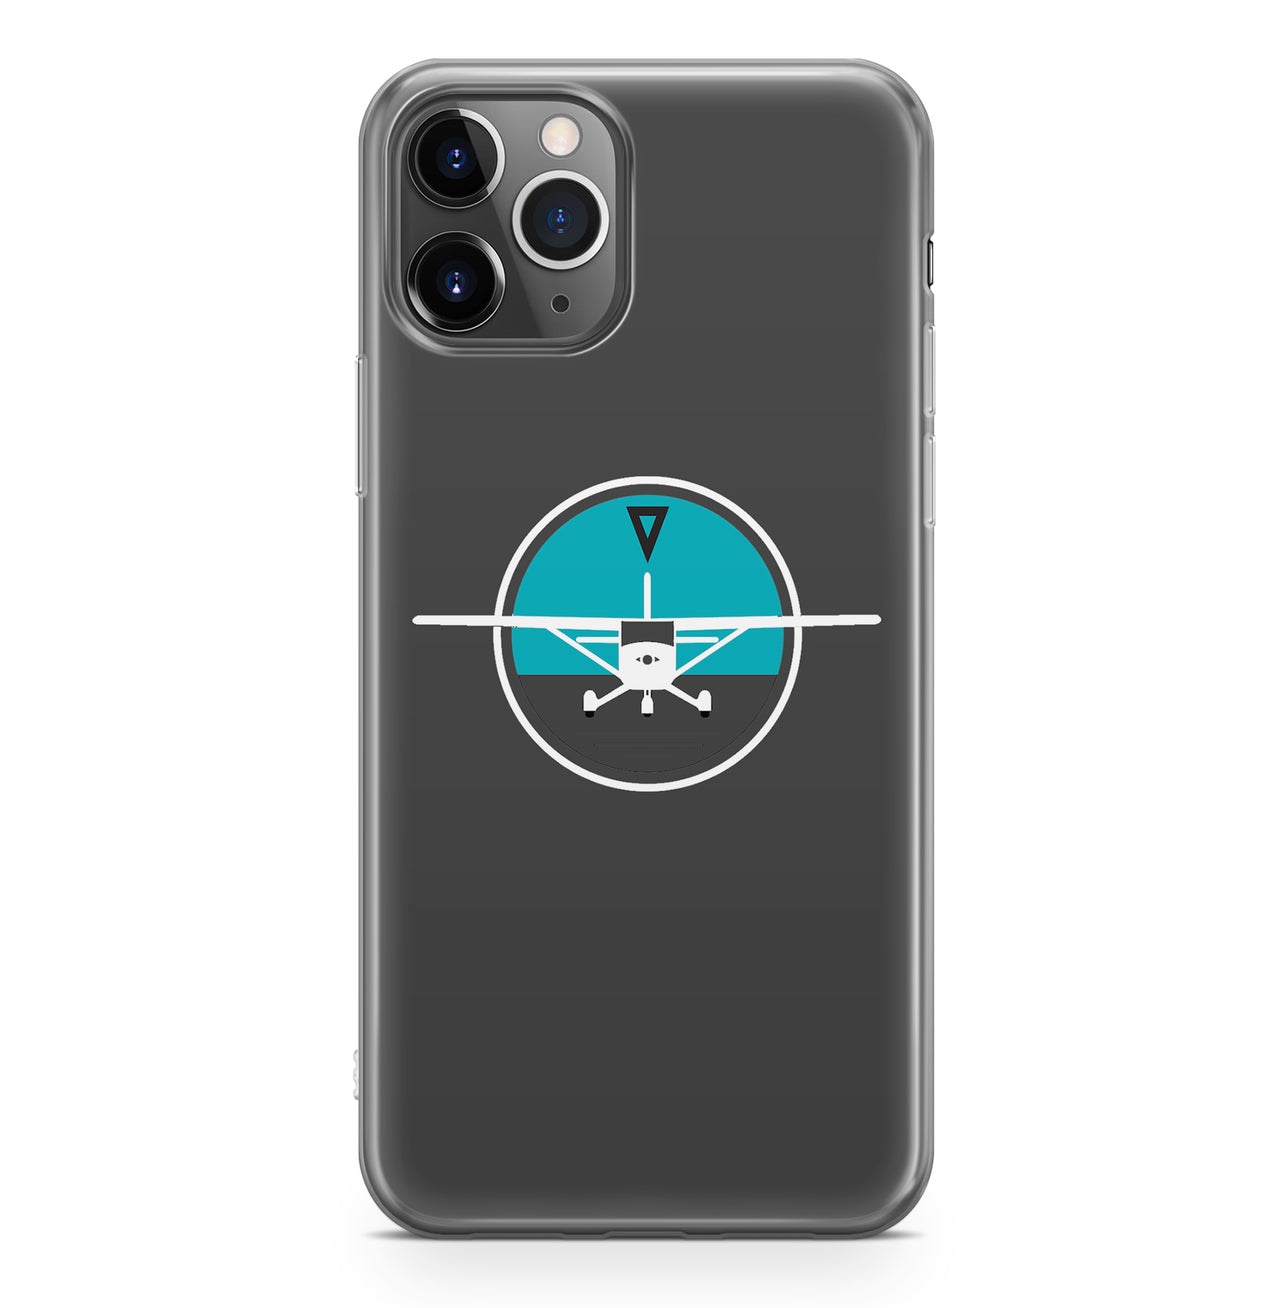 Cessna & Gyro Designed iPhone Cases